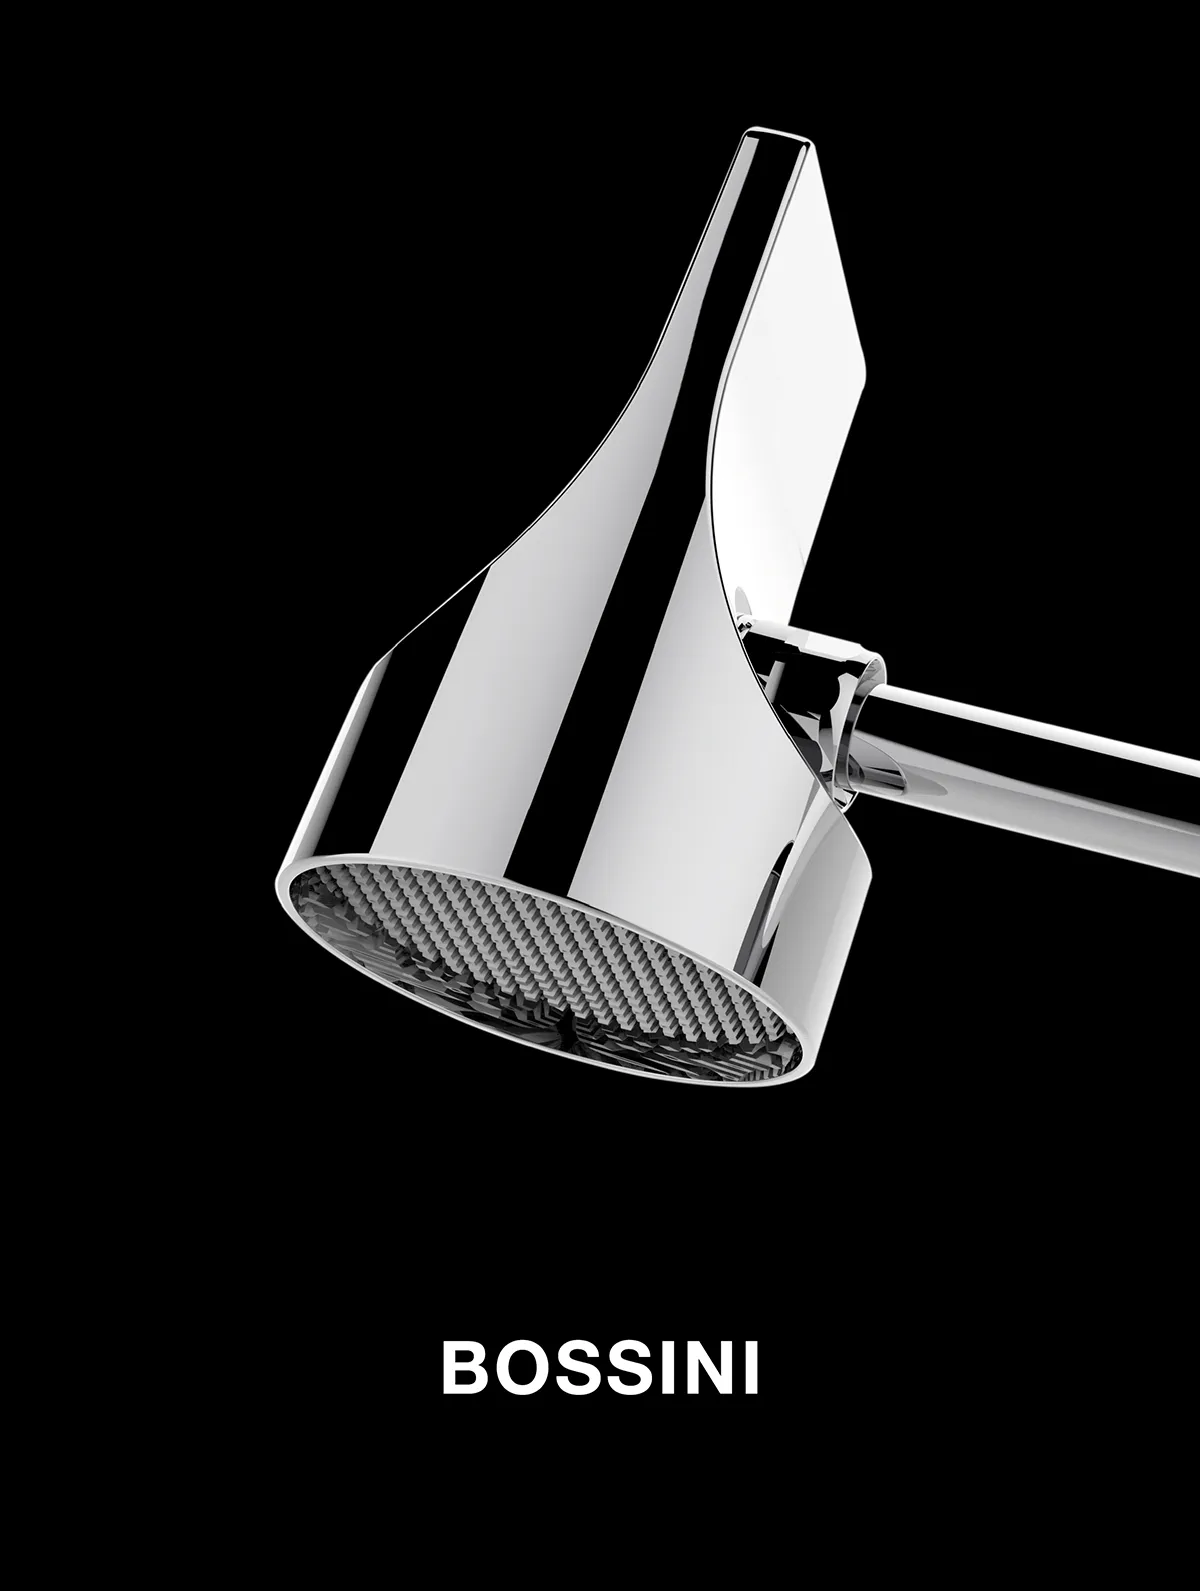 Bossini - 保持巅峰健康态。 - By HDG